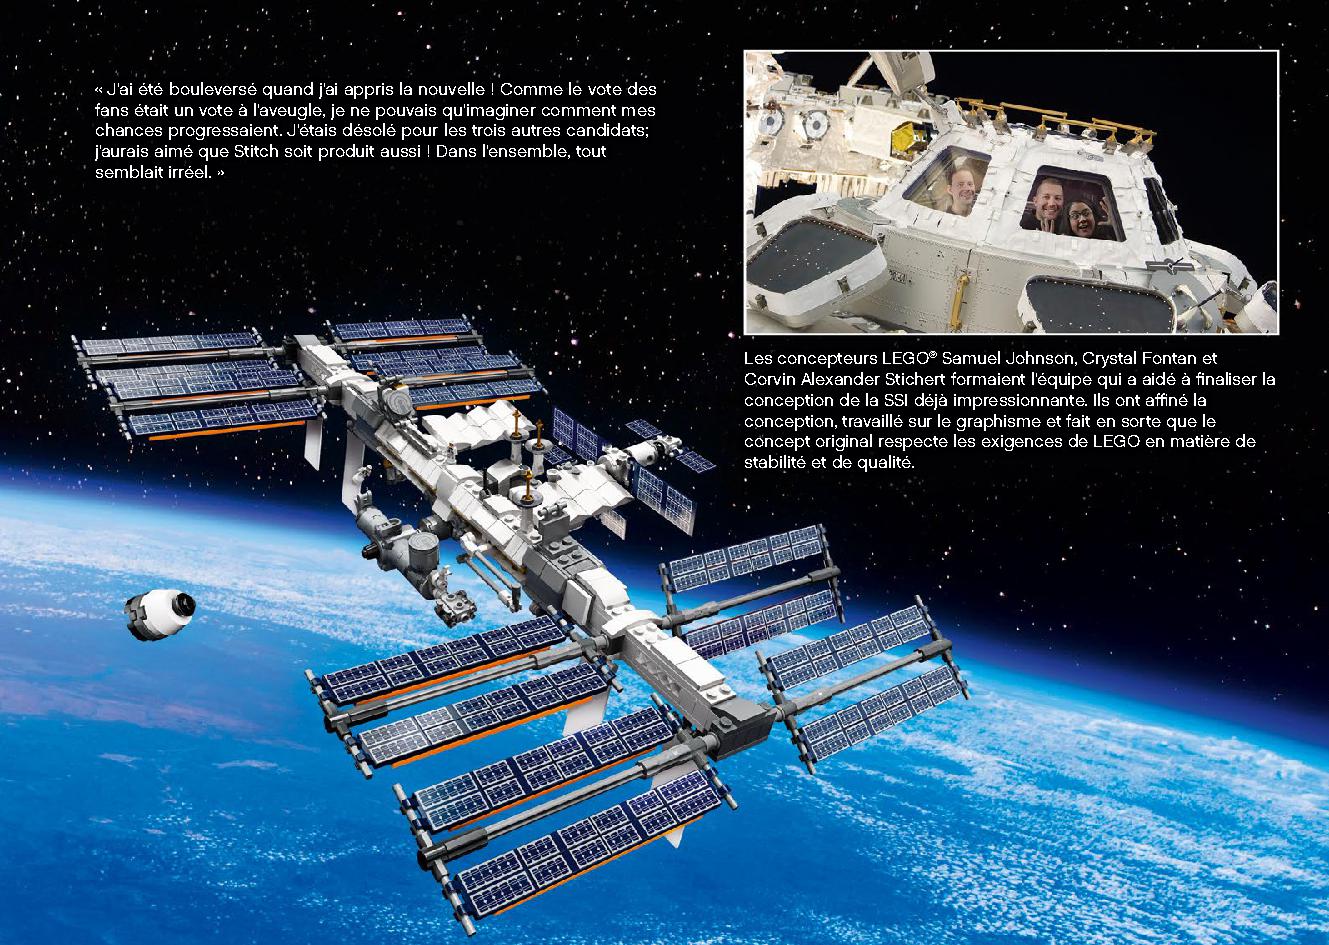 International Space Station 21321 レゴの商品情報 レゴの説明書・組立方法 17 page